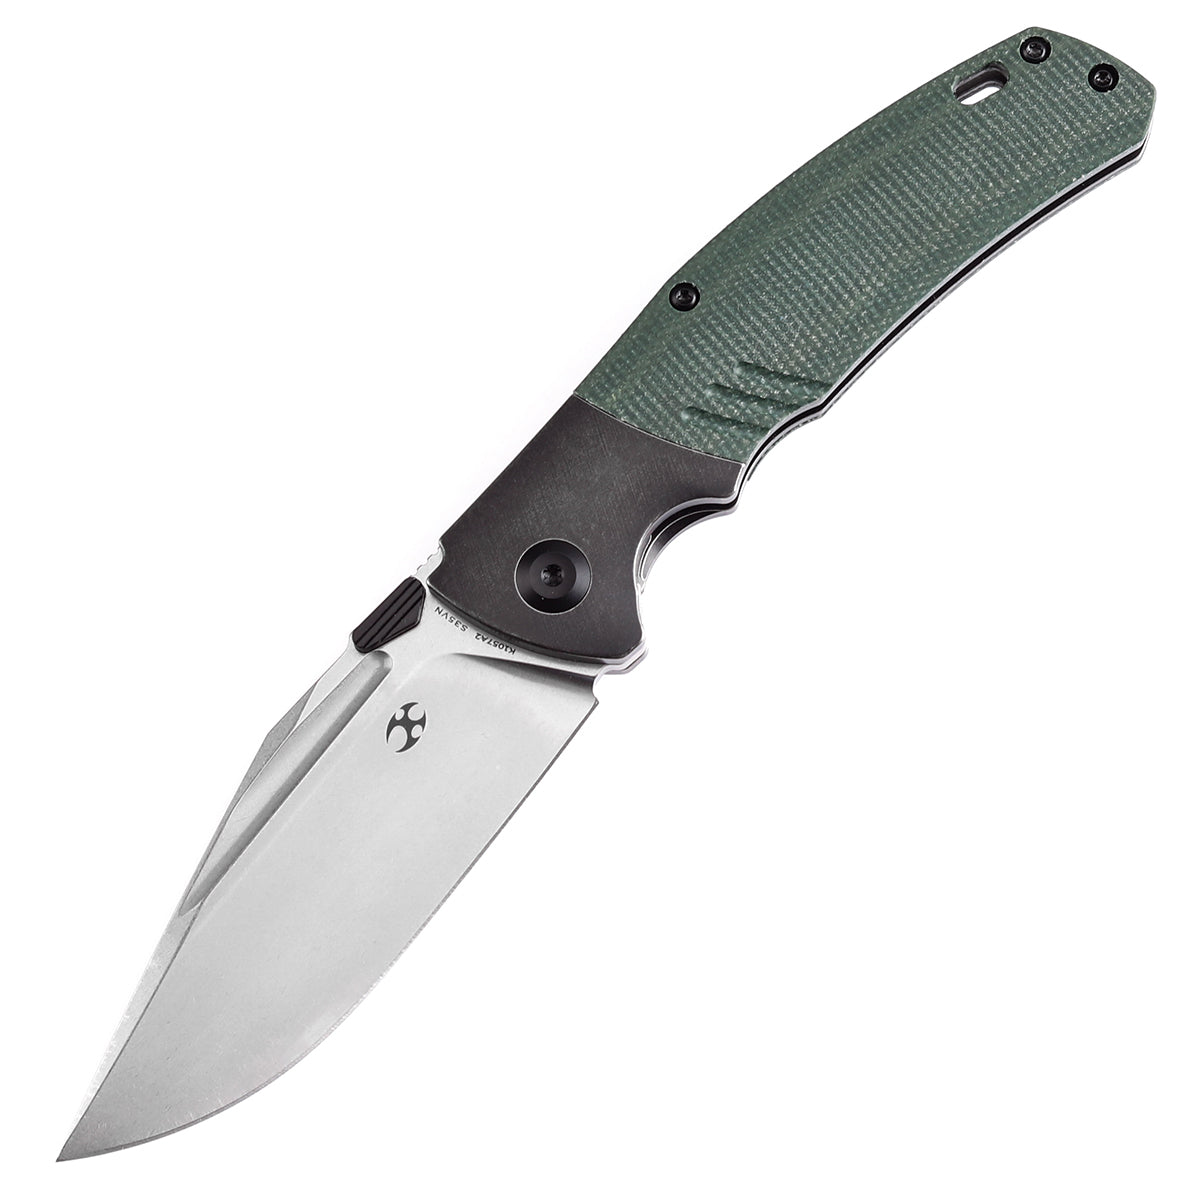 Kansept Hiinterland K1057A2 CPM-S35VN Blade Blackwash Titanium + Green Micarta Inlay Handle Flipper Knife